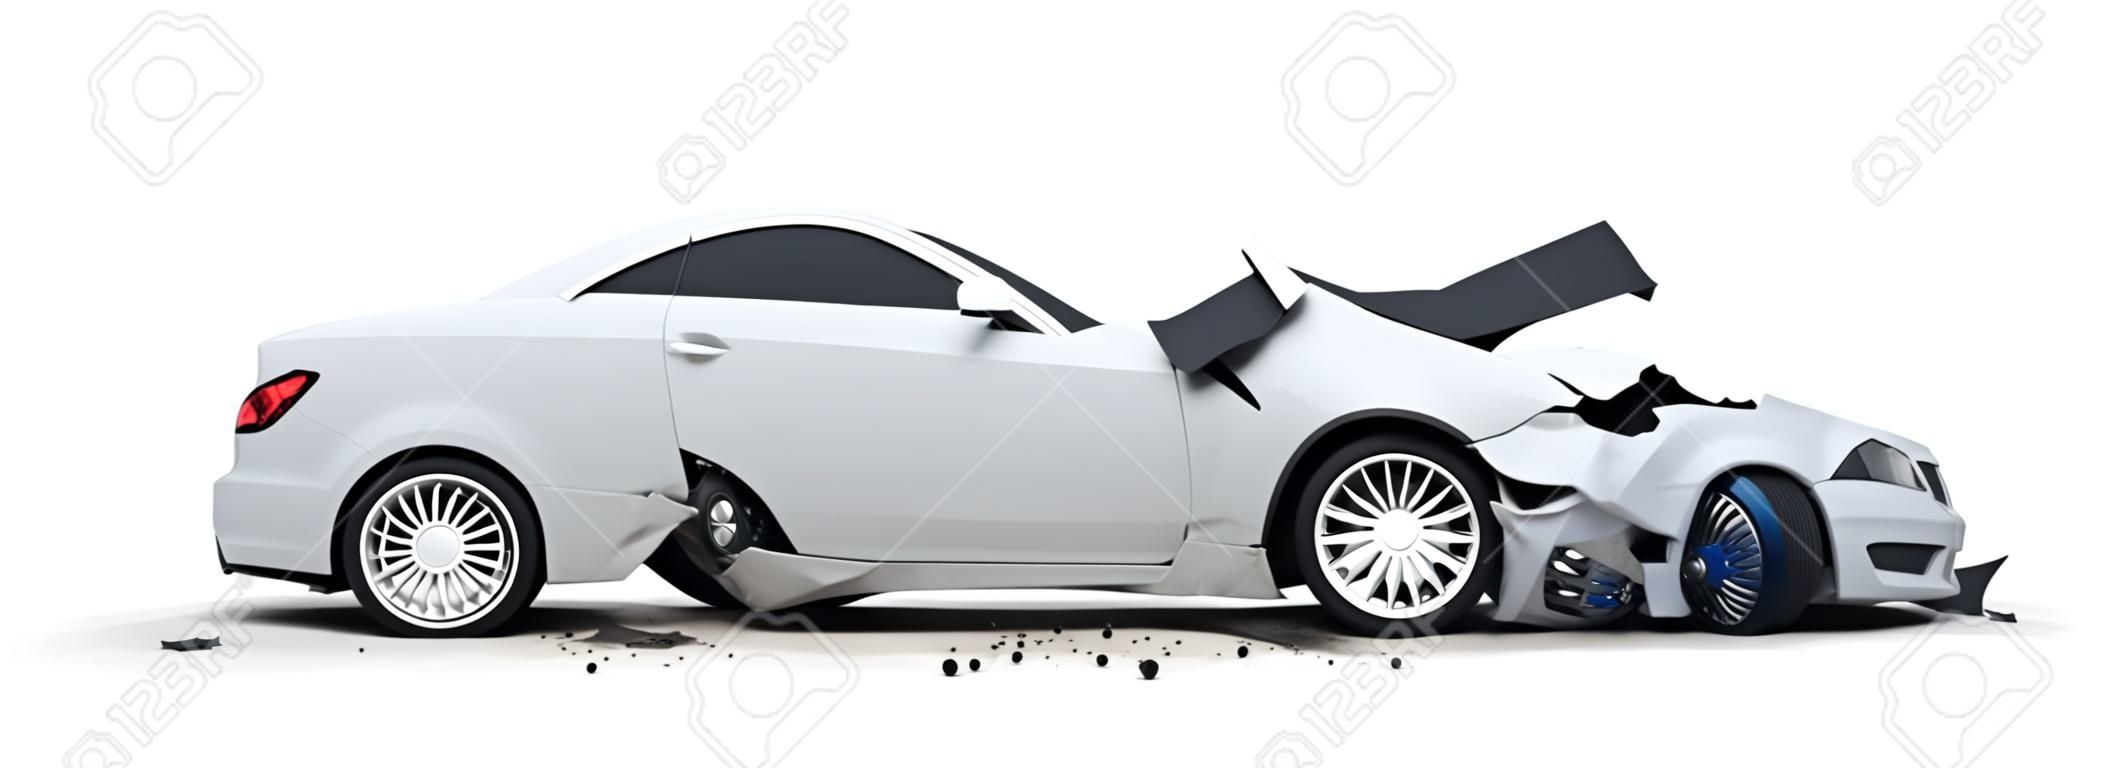 Two car crash on white background. 3d illustration